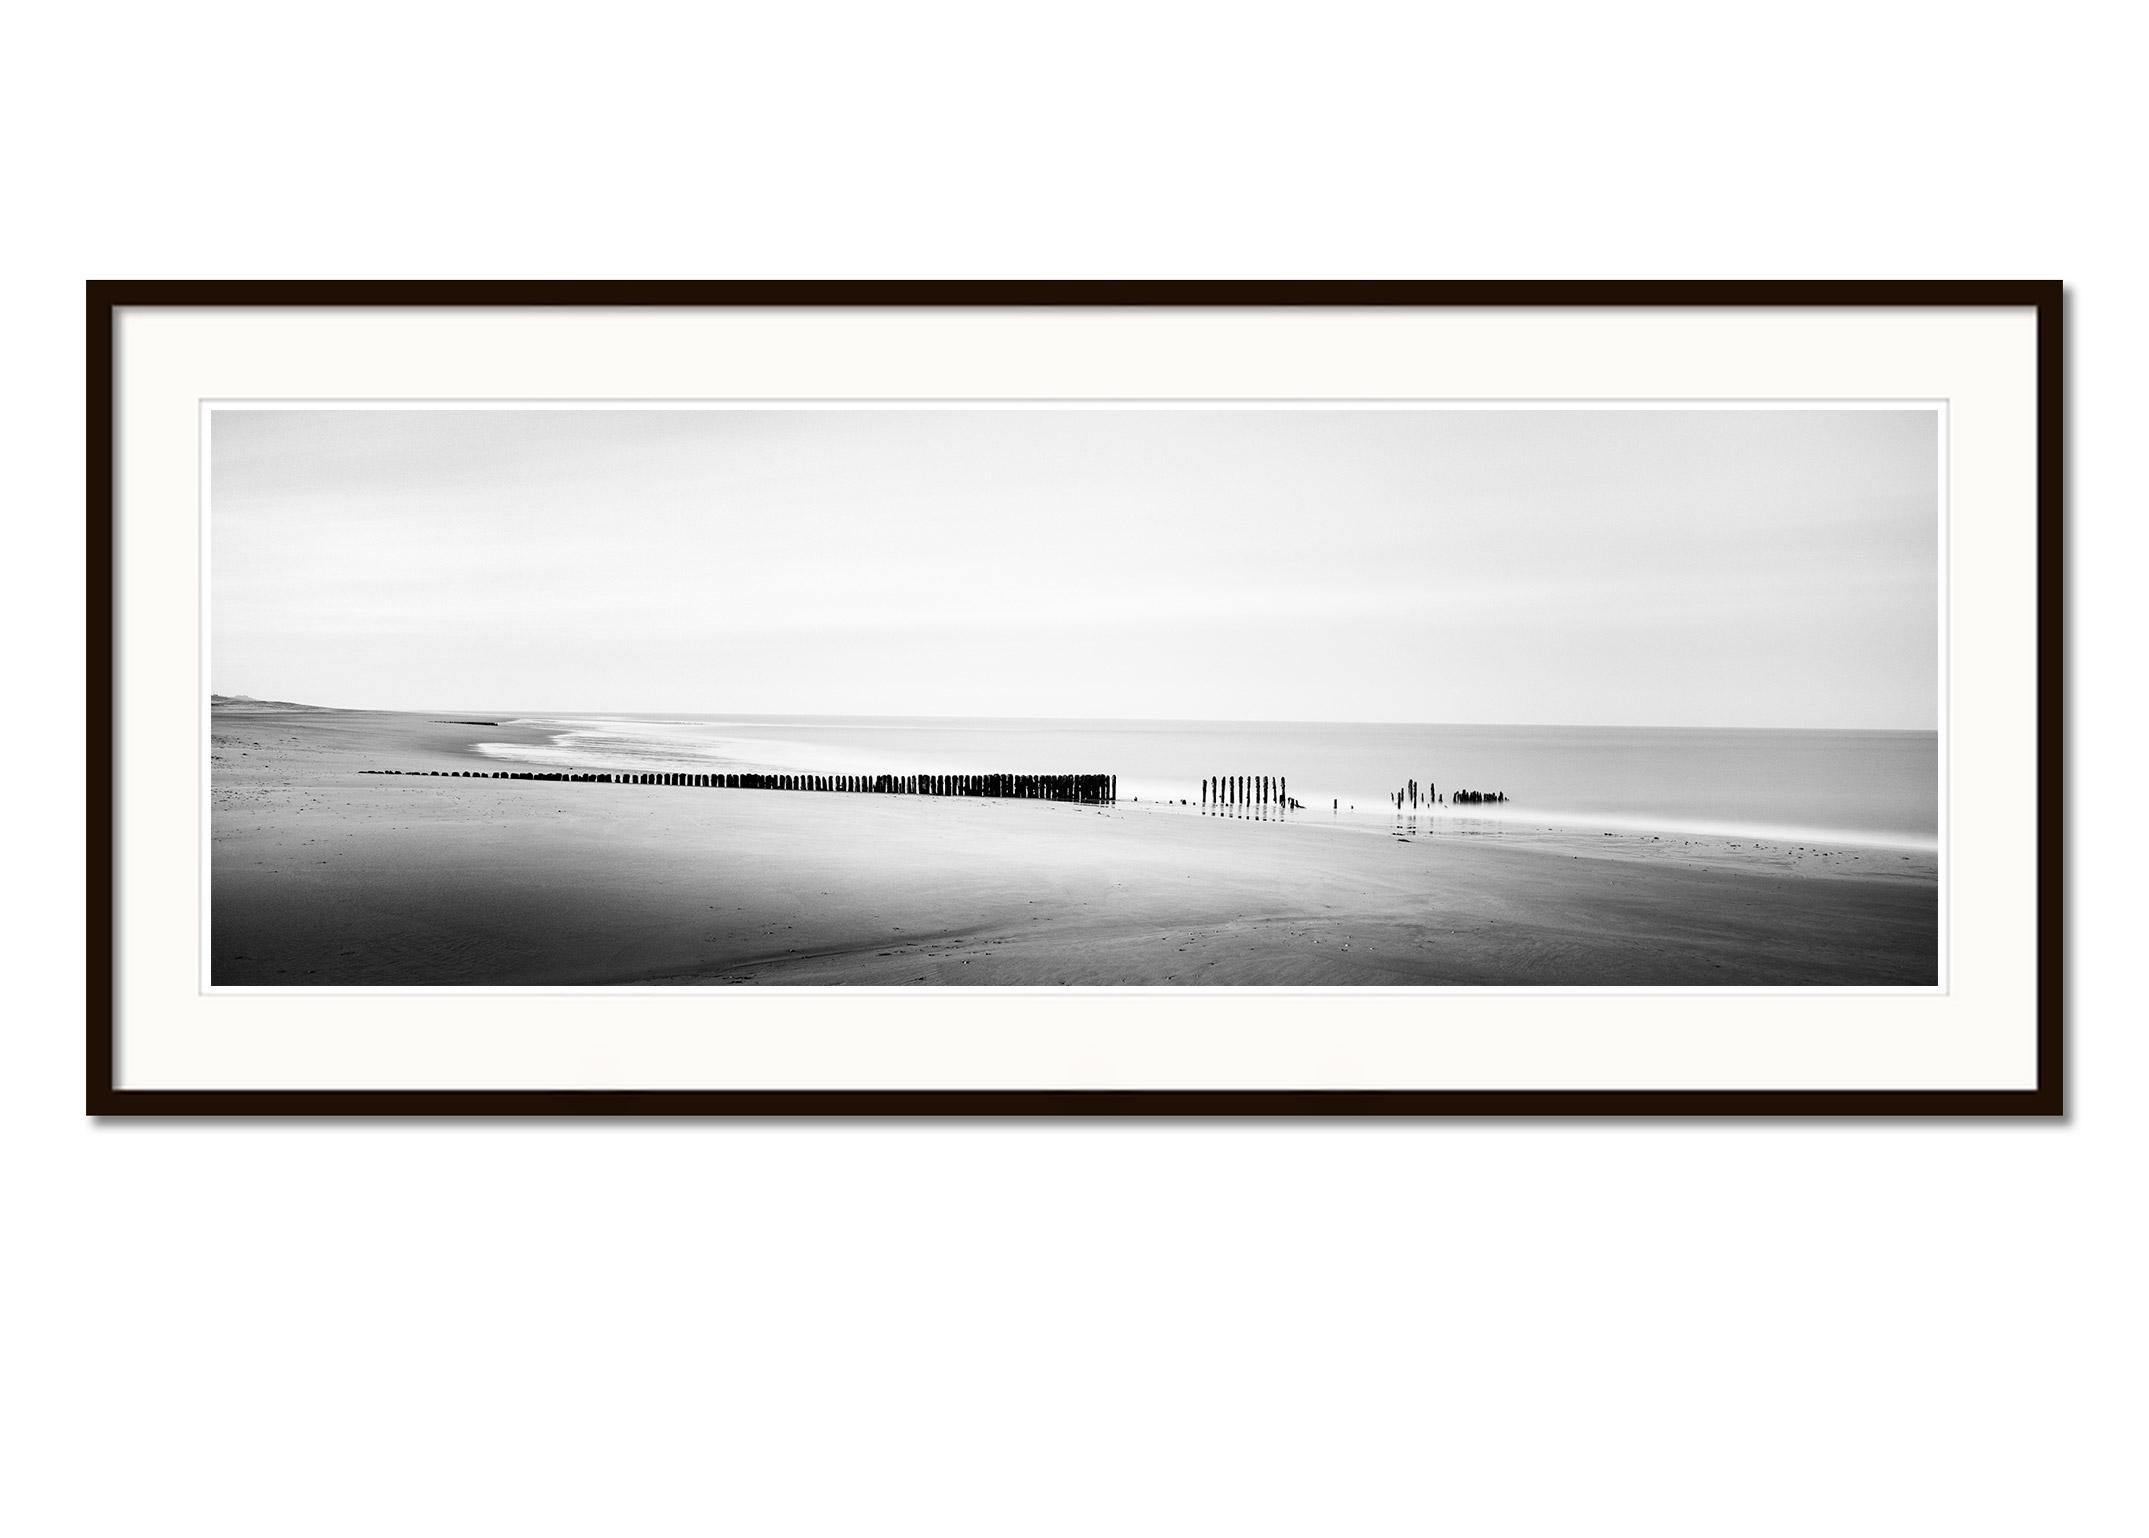 Broken Groyne, Beach, Sylt, Germany, black and white landscape photography print - Gray Landscape Photograph by Gerald Berghammer